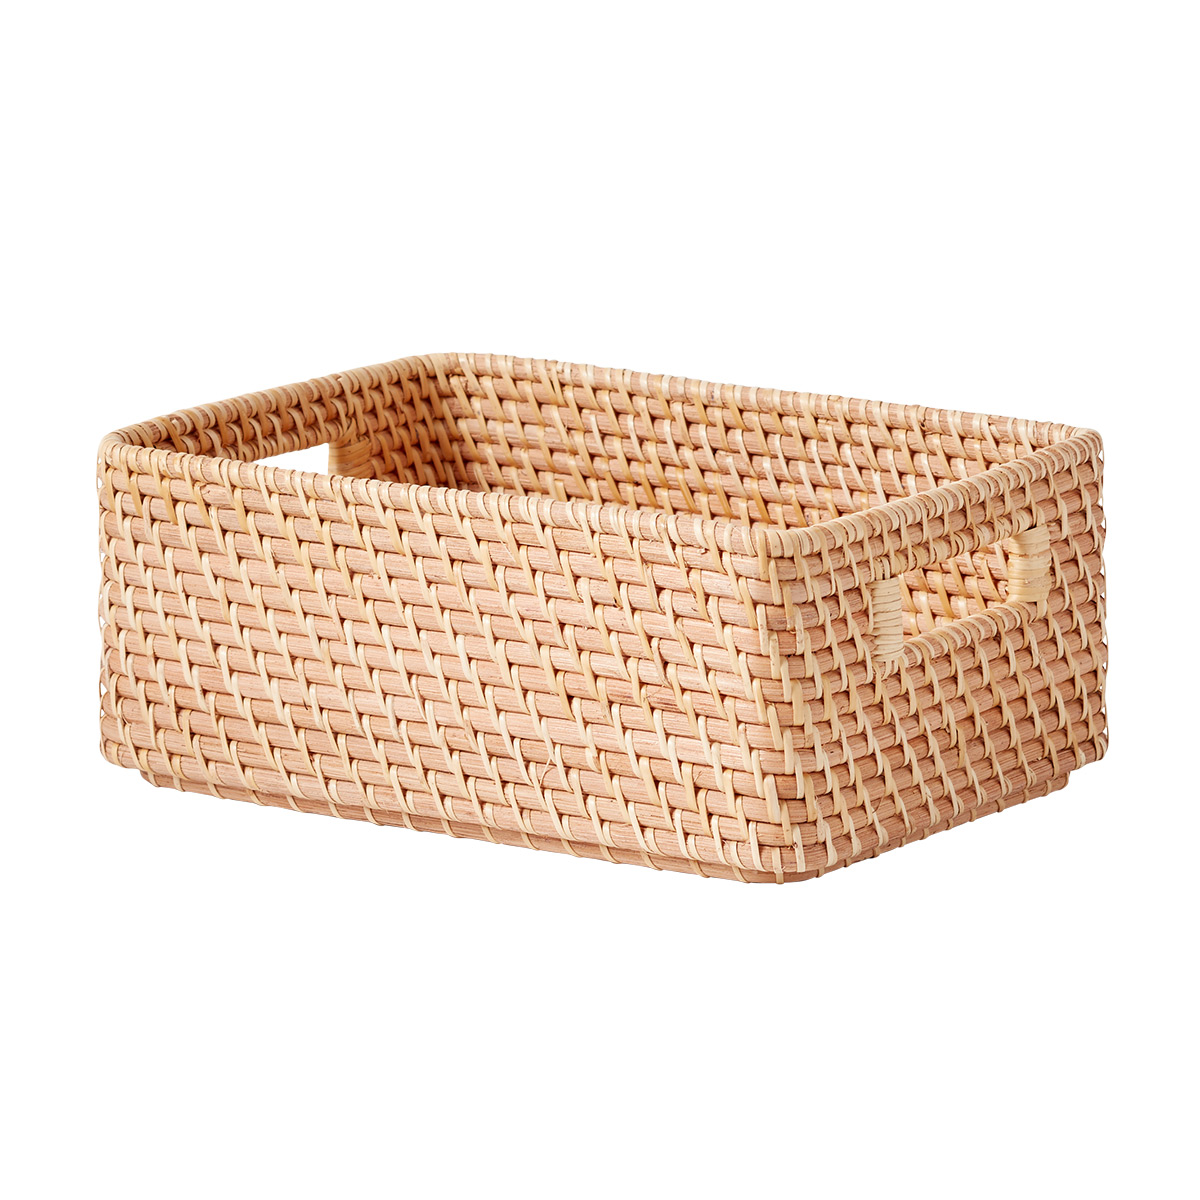 Y-weave Small Decorative Storage Basket Blue - Brightroom™ : Target